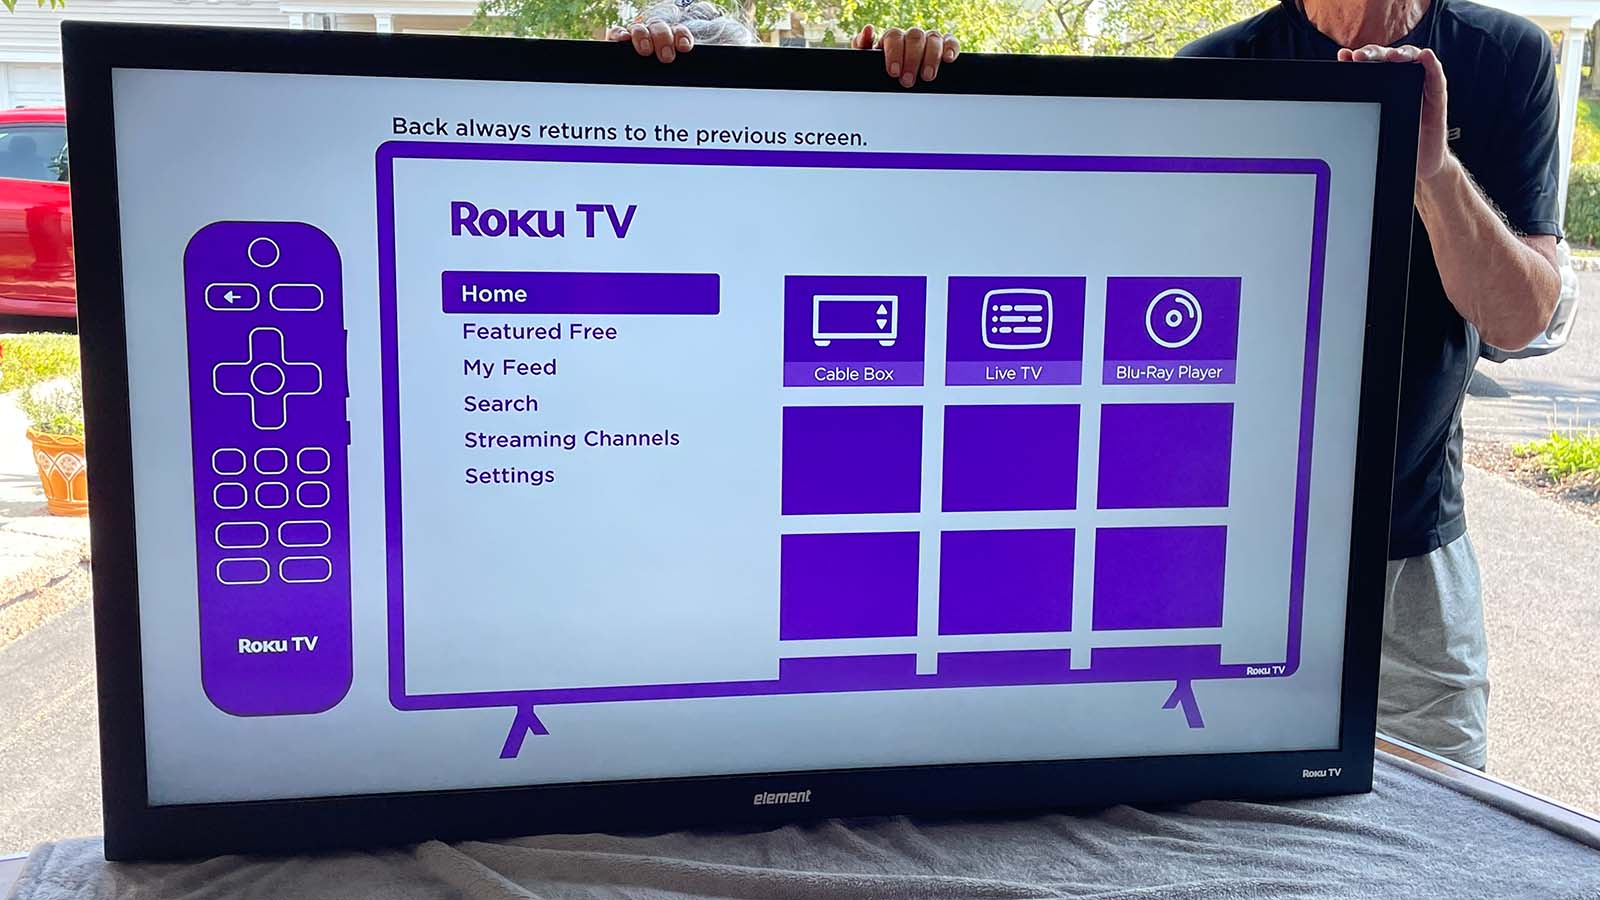 Introducing the first outdoor Roku TV